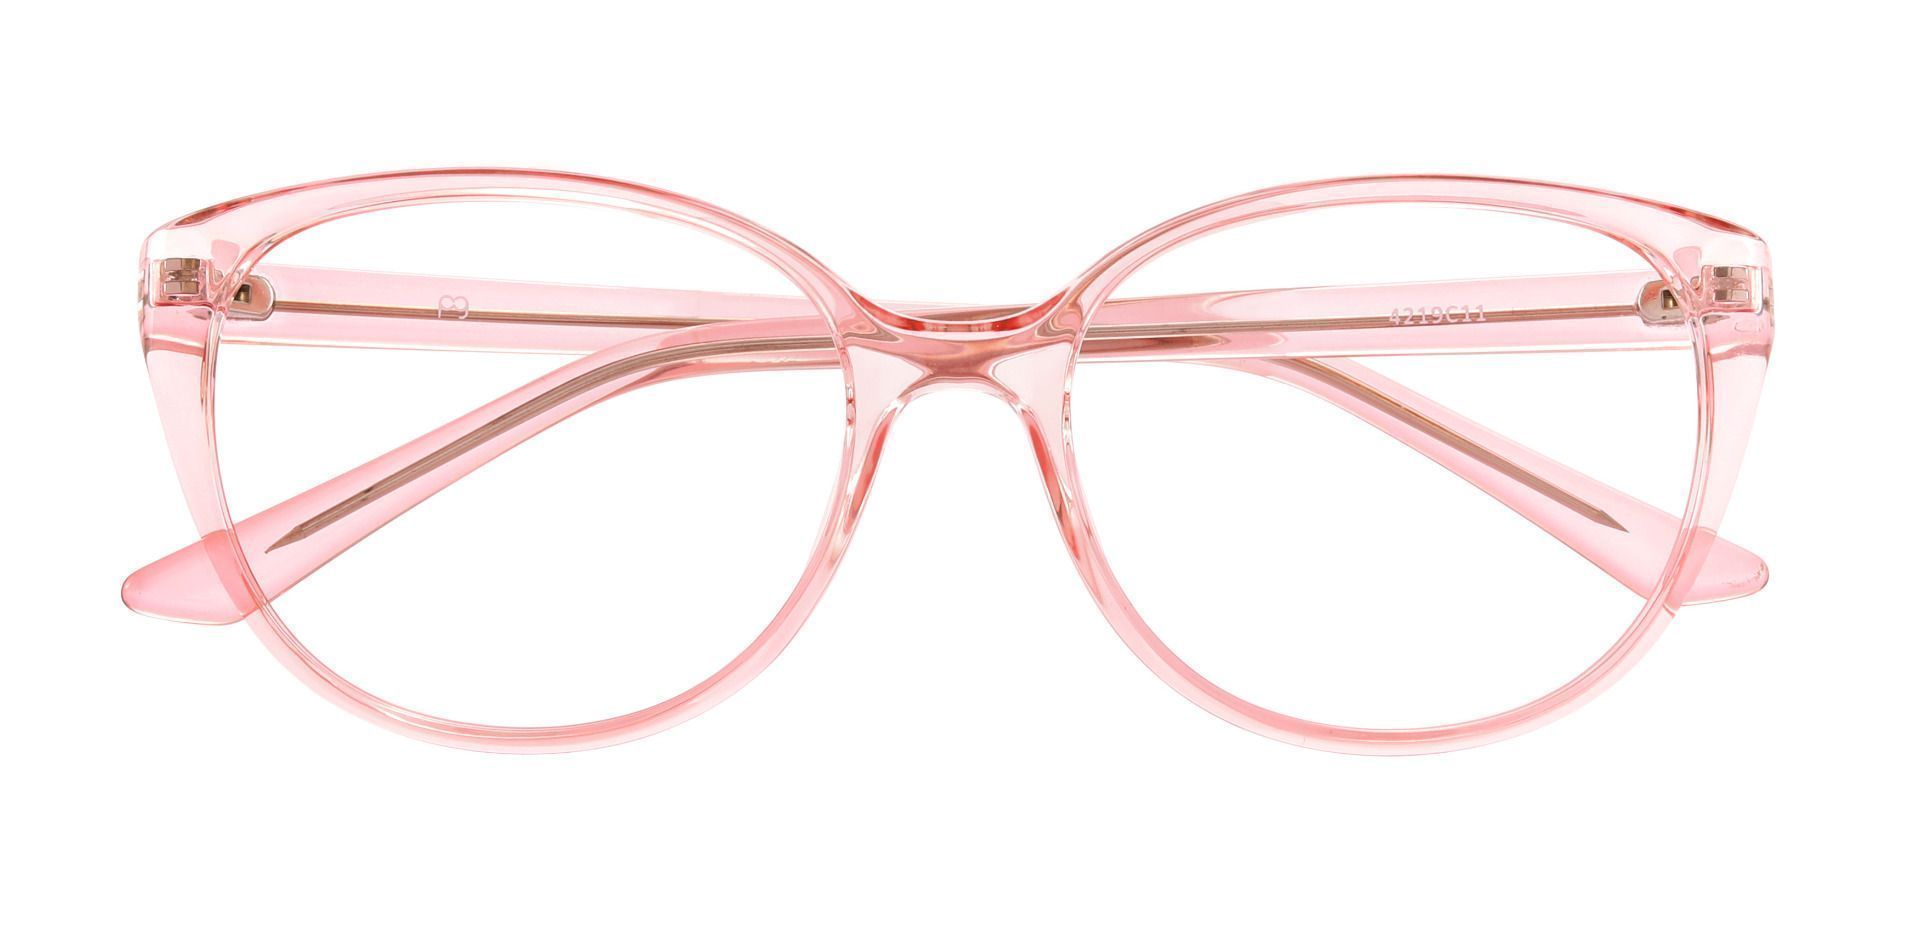 Polly Oval Prescription Glasses - Pink